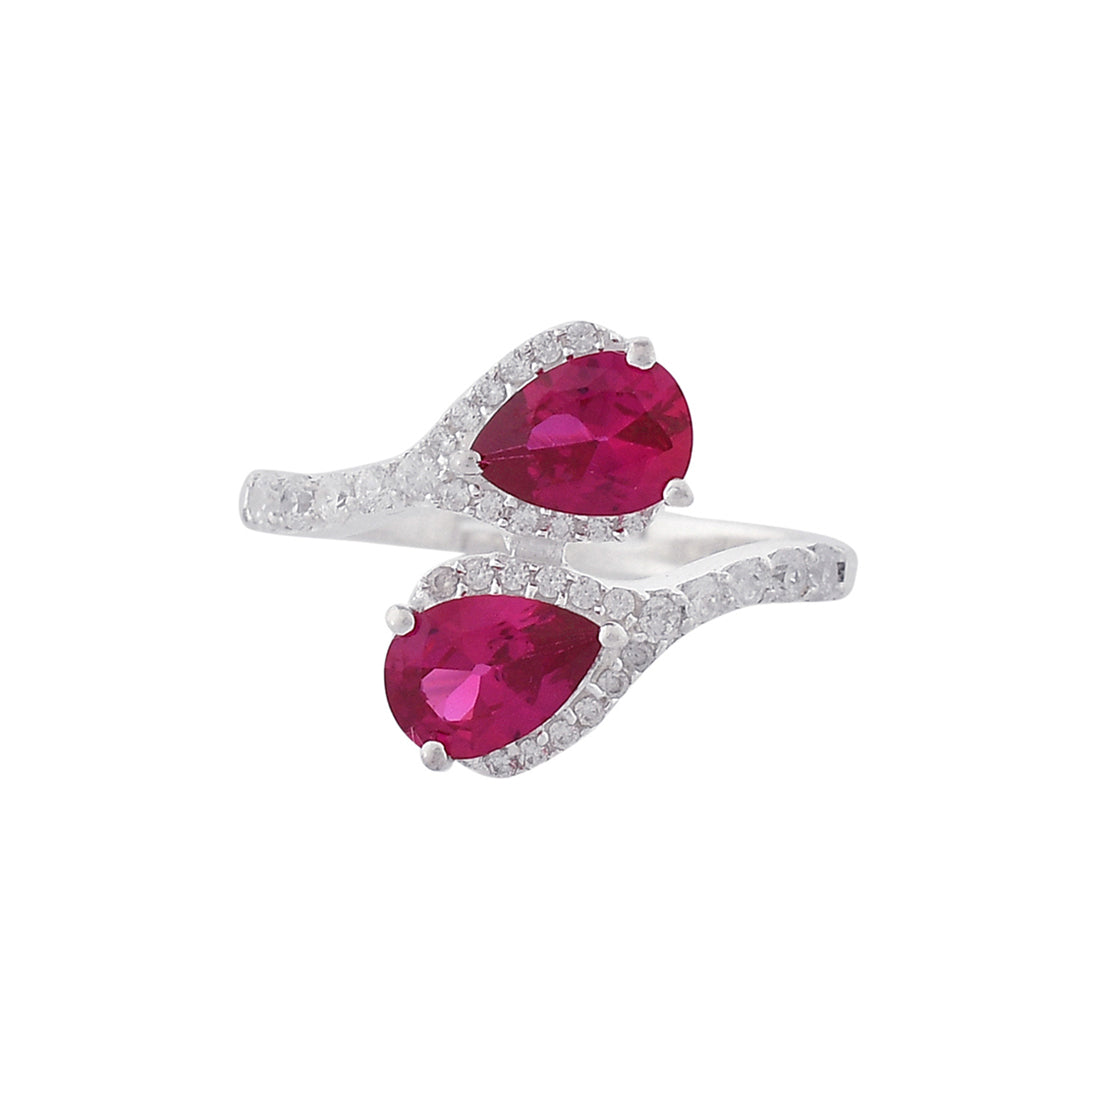 Women's Adjustable 925 Sterling Silver Teardrop Cut Ruby Gems Embellished Ring - Voylla